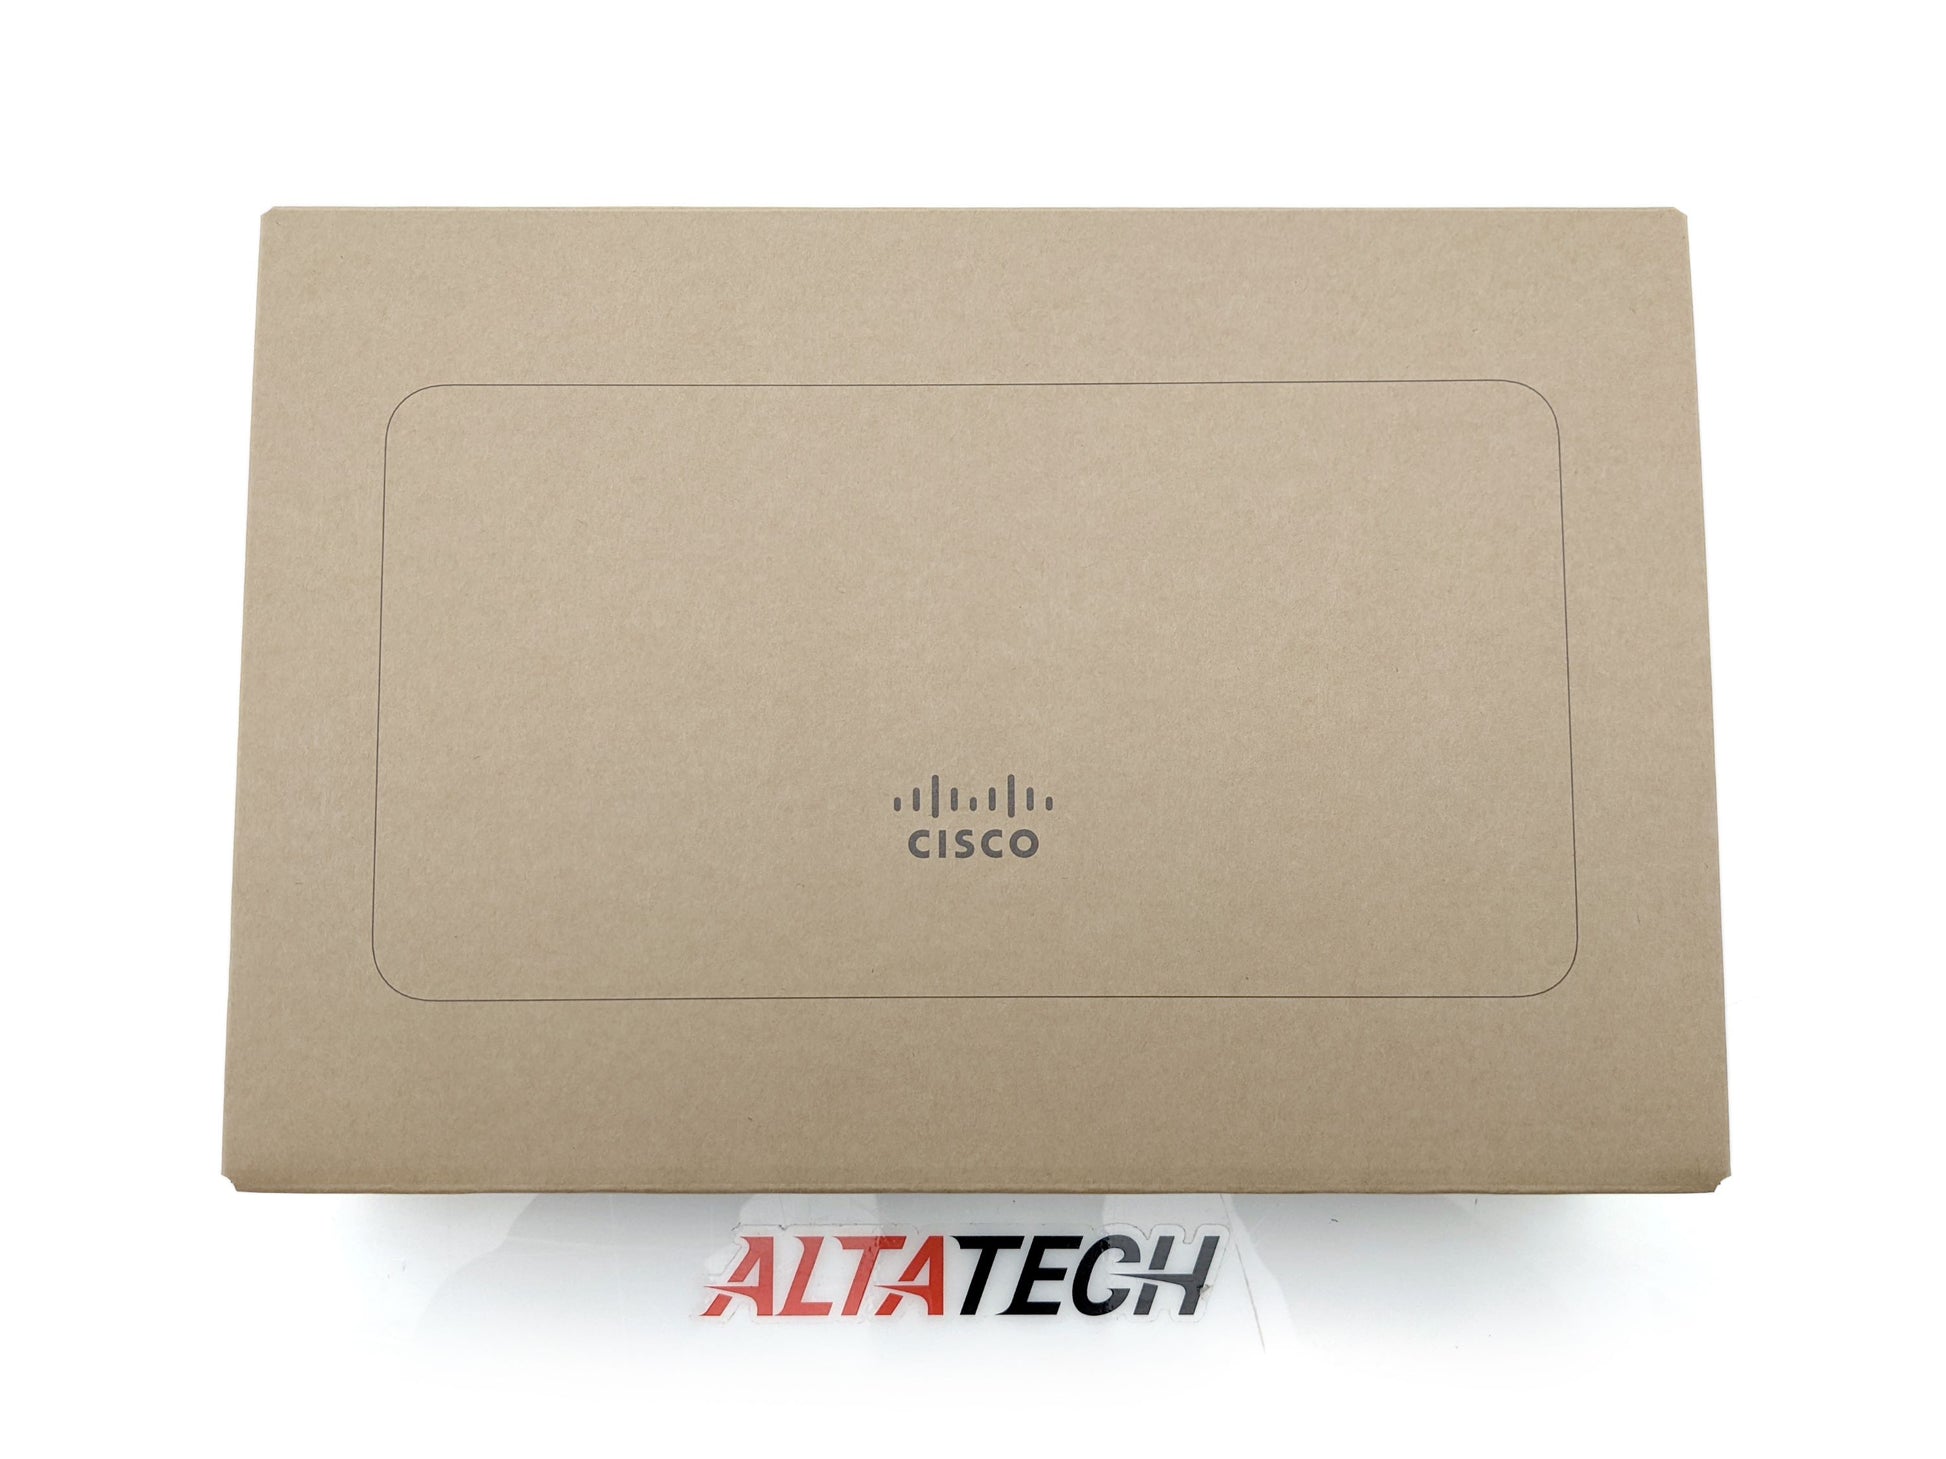 Cisco MX68-HW_NEW Meraki Unclaimed Cloud Managed Router, New Sealed